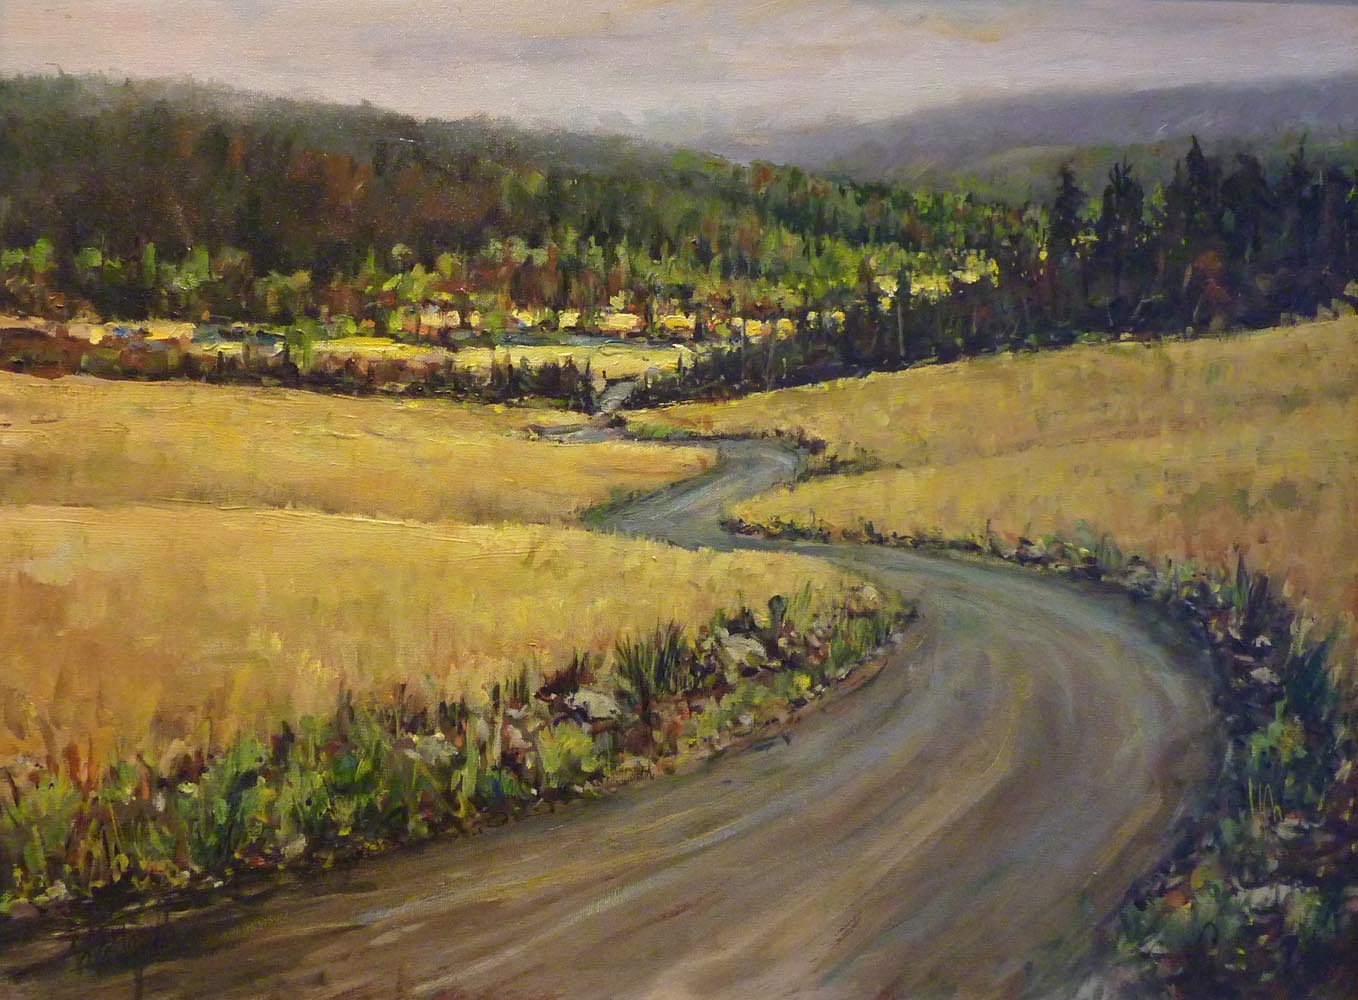 grasslands | Landscapes of British Columbia | Artist painter Kim Pollard | Canada | Pacific Northwest